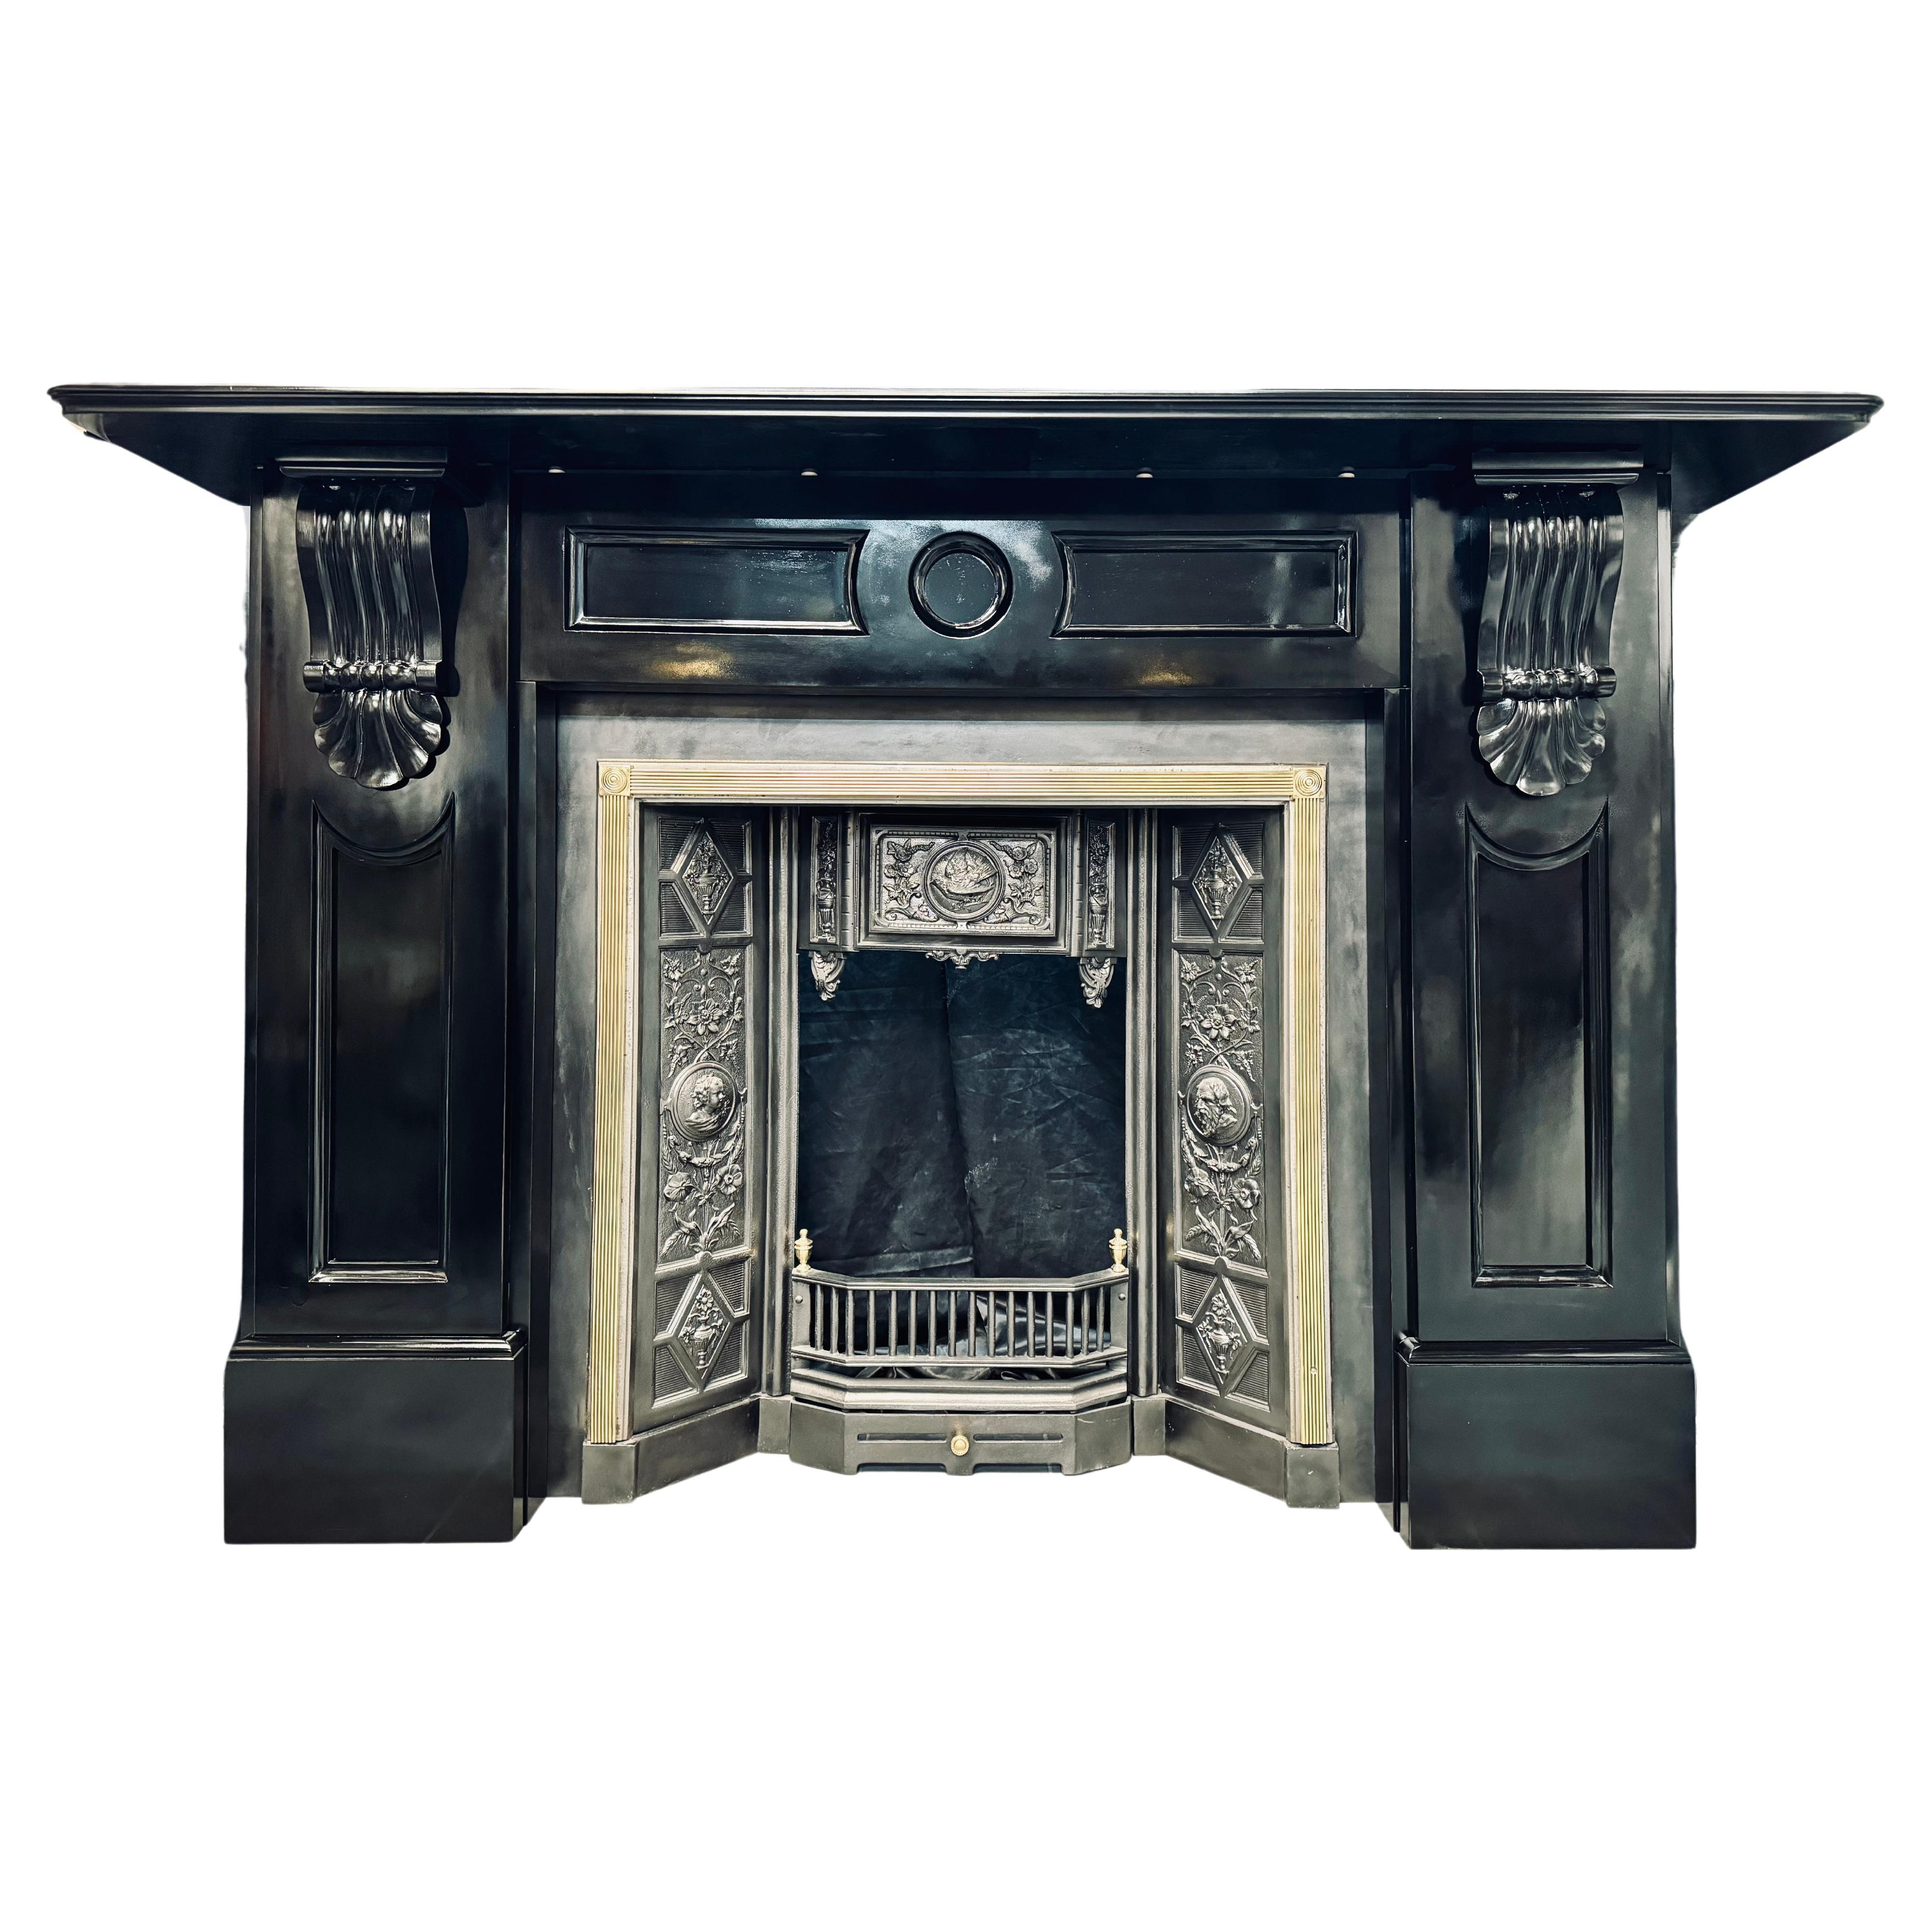 Large 19th Century Victorian Scottish Slate Corbeled Fireplace Surround. 